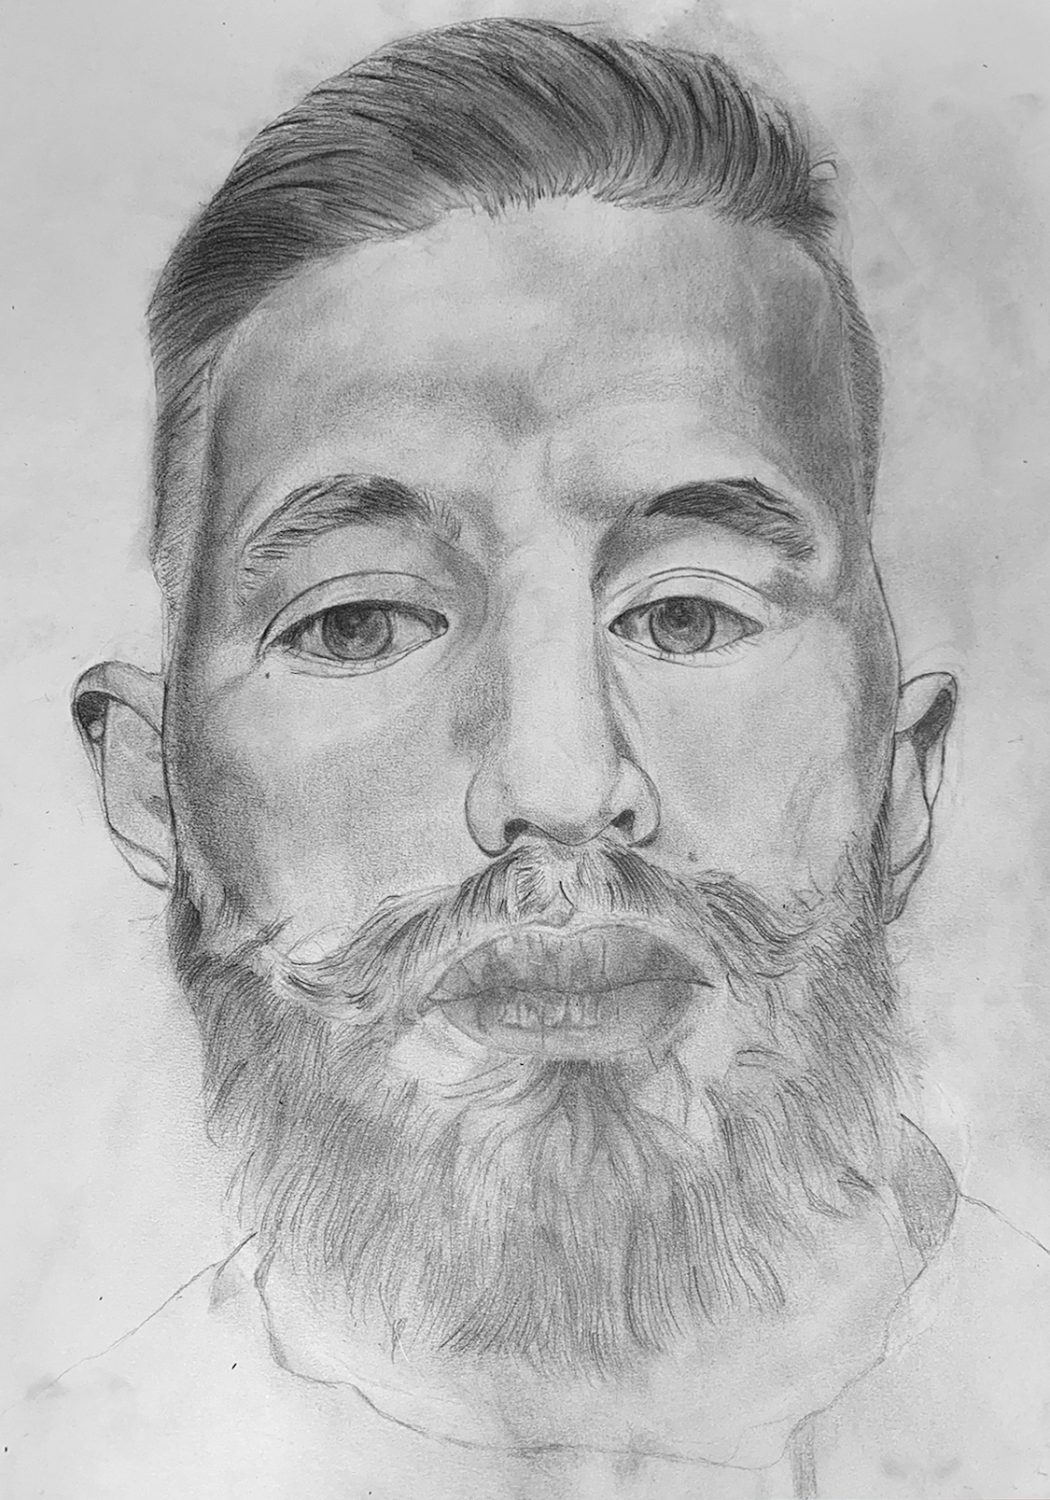 thumbnail of Self-portrait by Bernardo Villarreal. Medium: Graphite on paper. Size 24 x 18 inches Date 2020